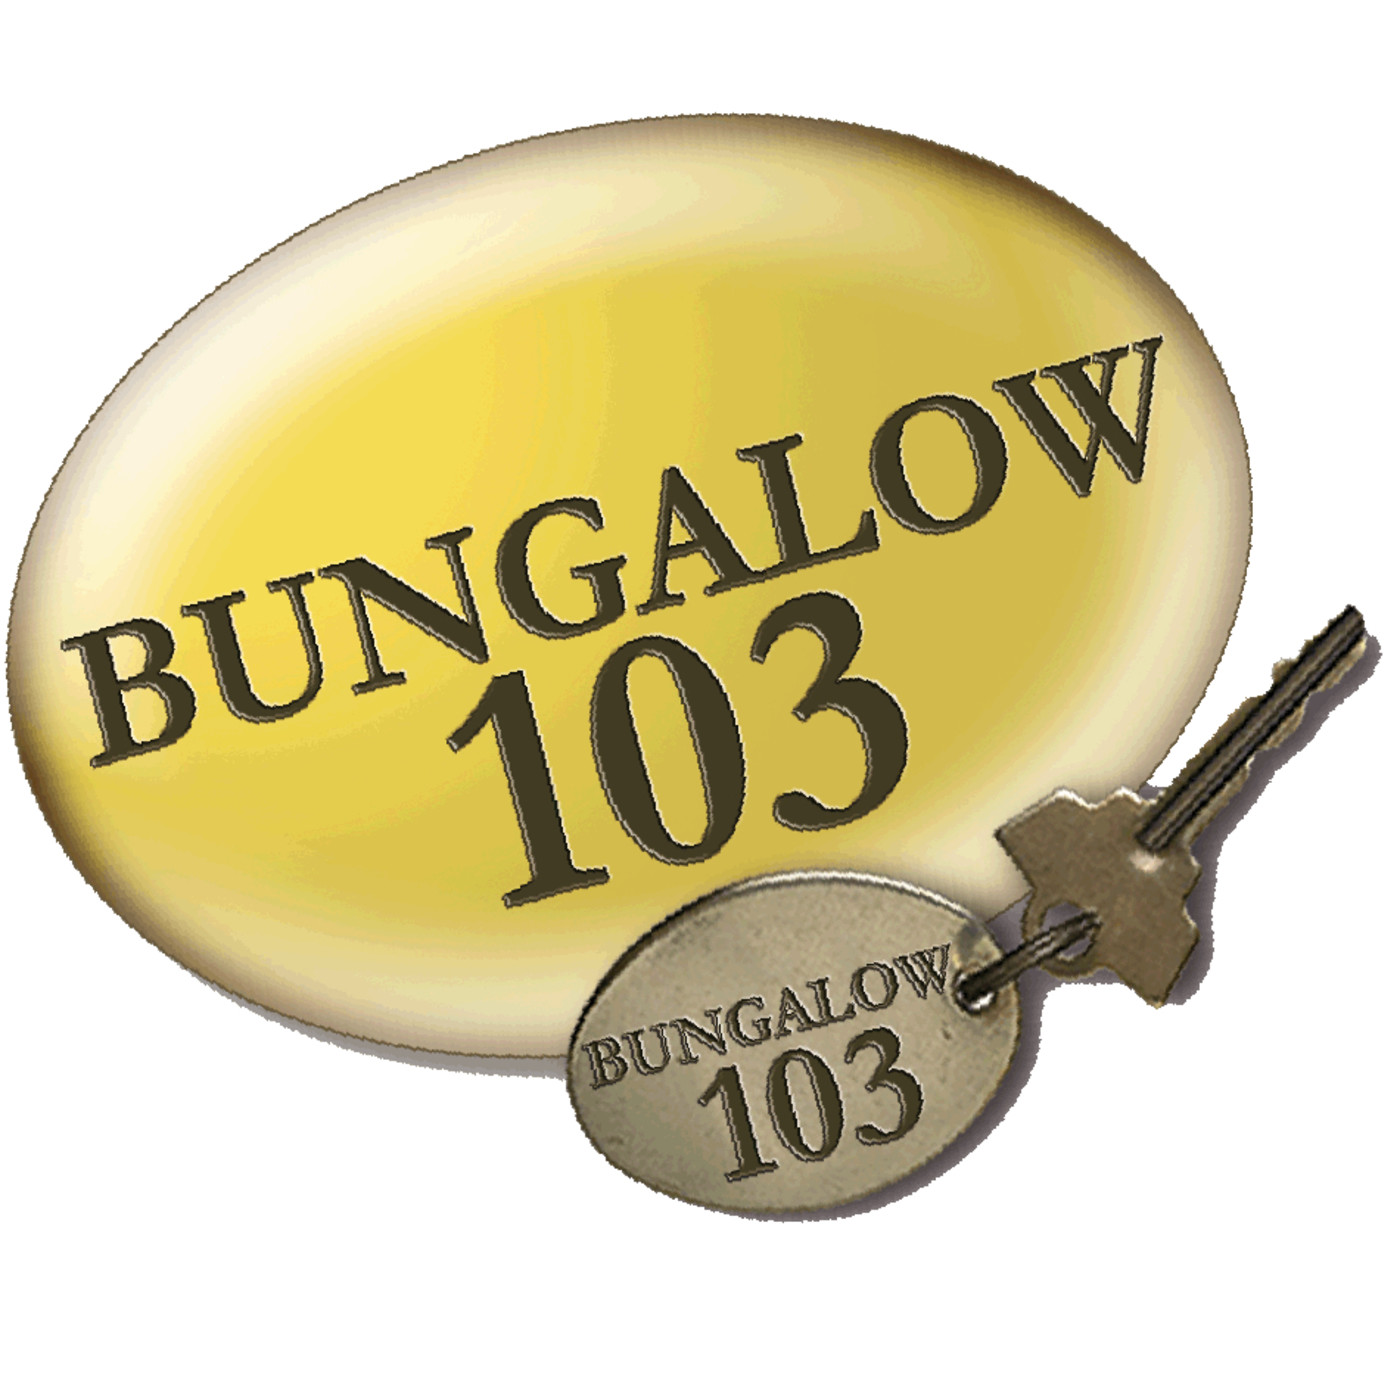 Bungalow 103